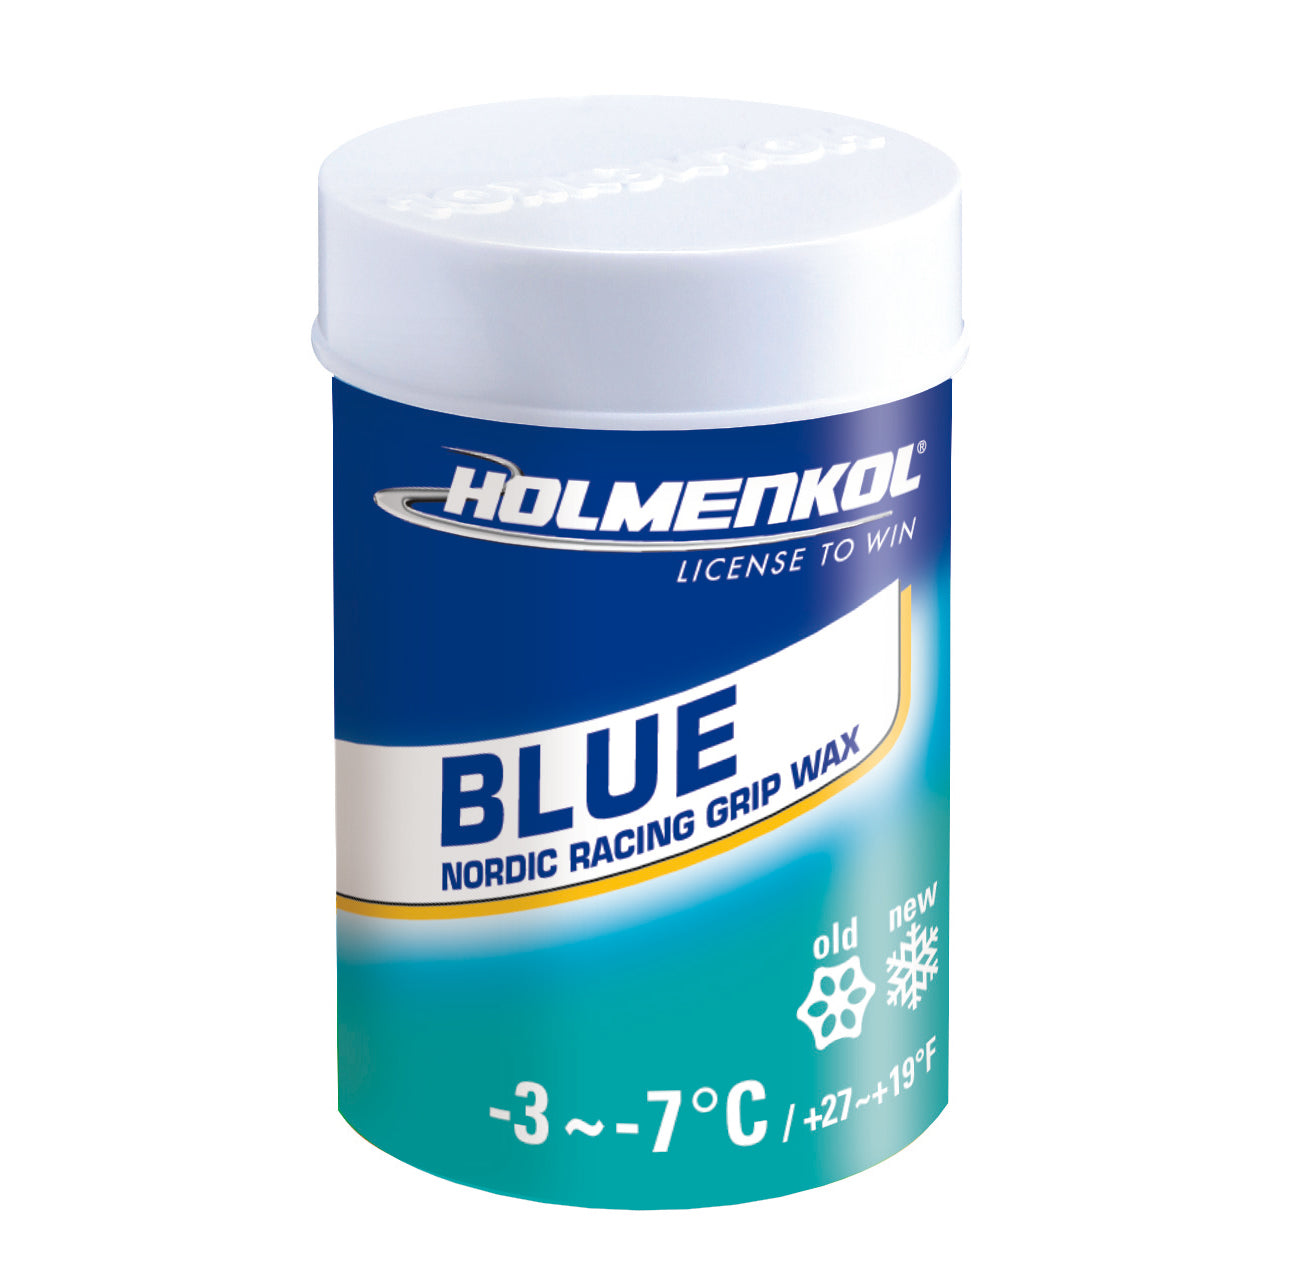 Buy blue-3-7-c Holmenkol Grip Wax